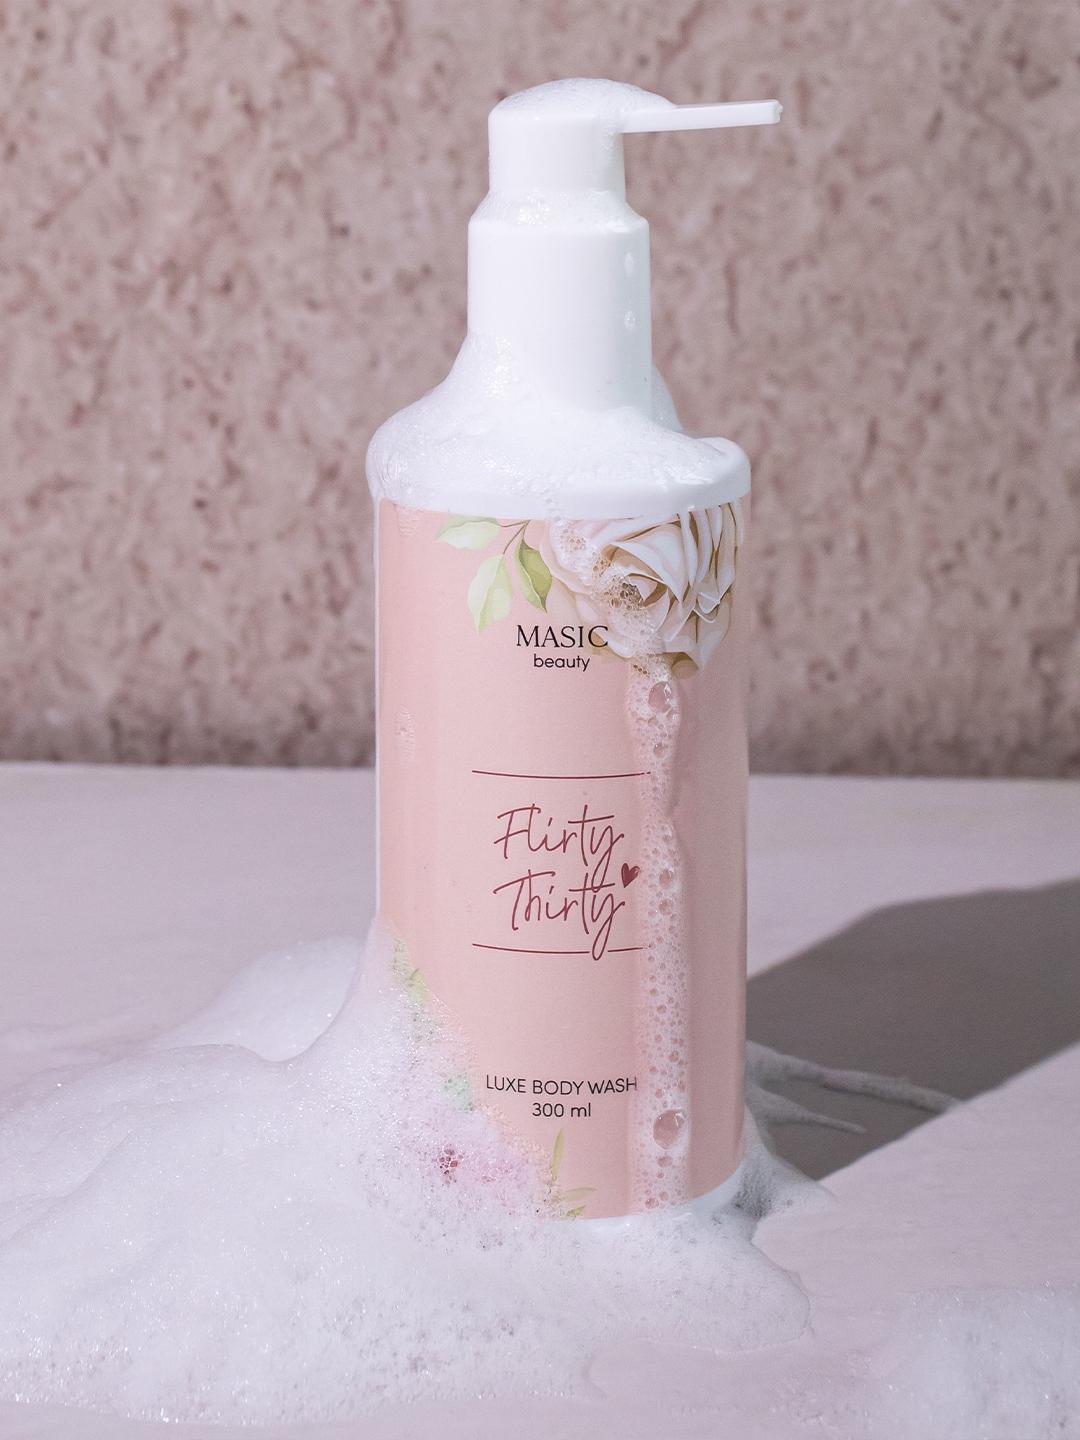 MASIC beauty Flirty Thirty Luxe Body Wash with Glycerine - 300 ml